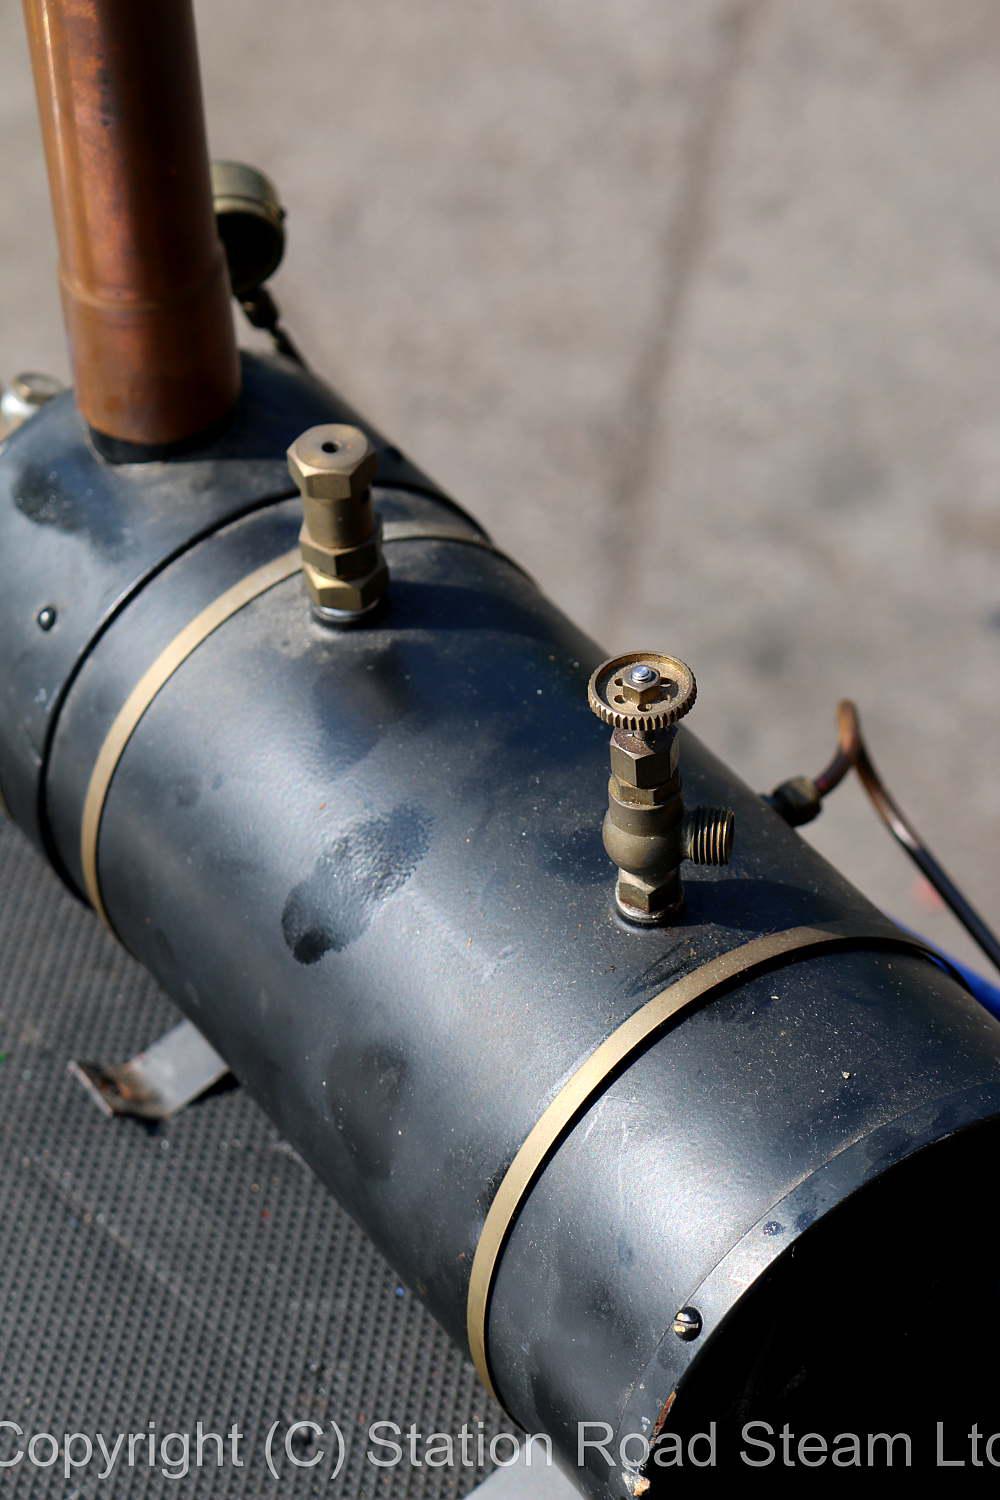 Stuart SH4 gas-fired boiler with hand pump, gas tank & burner